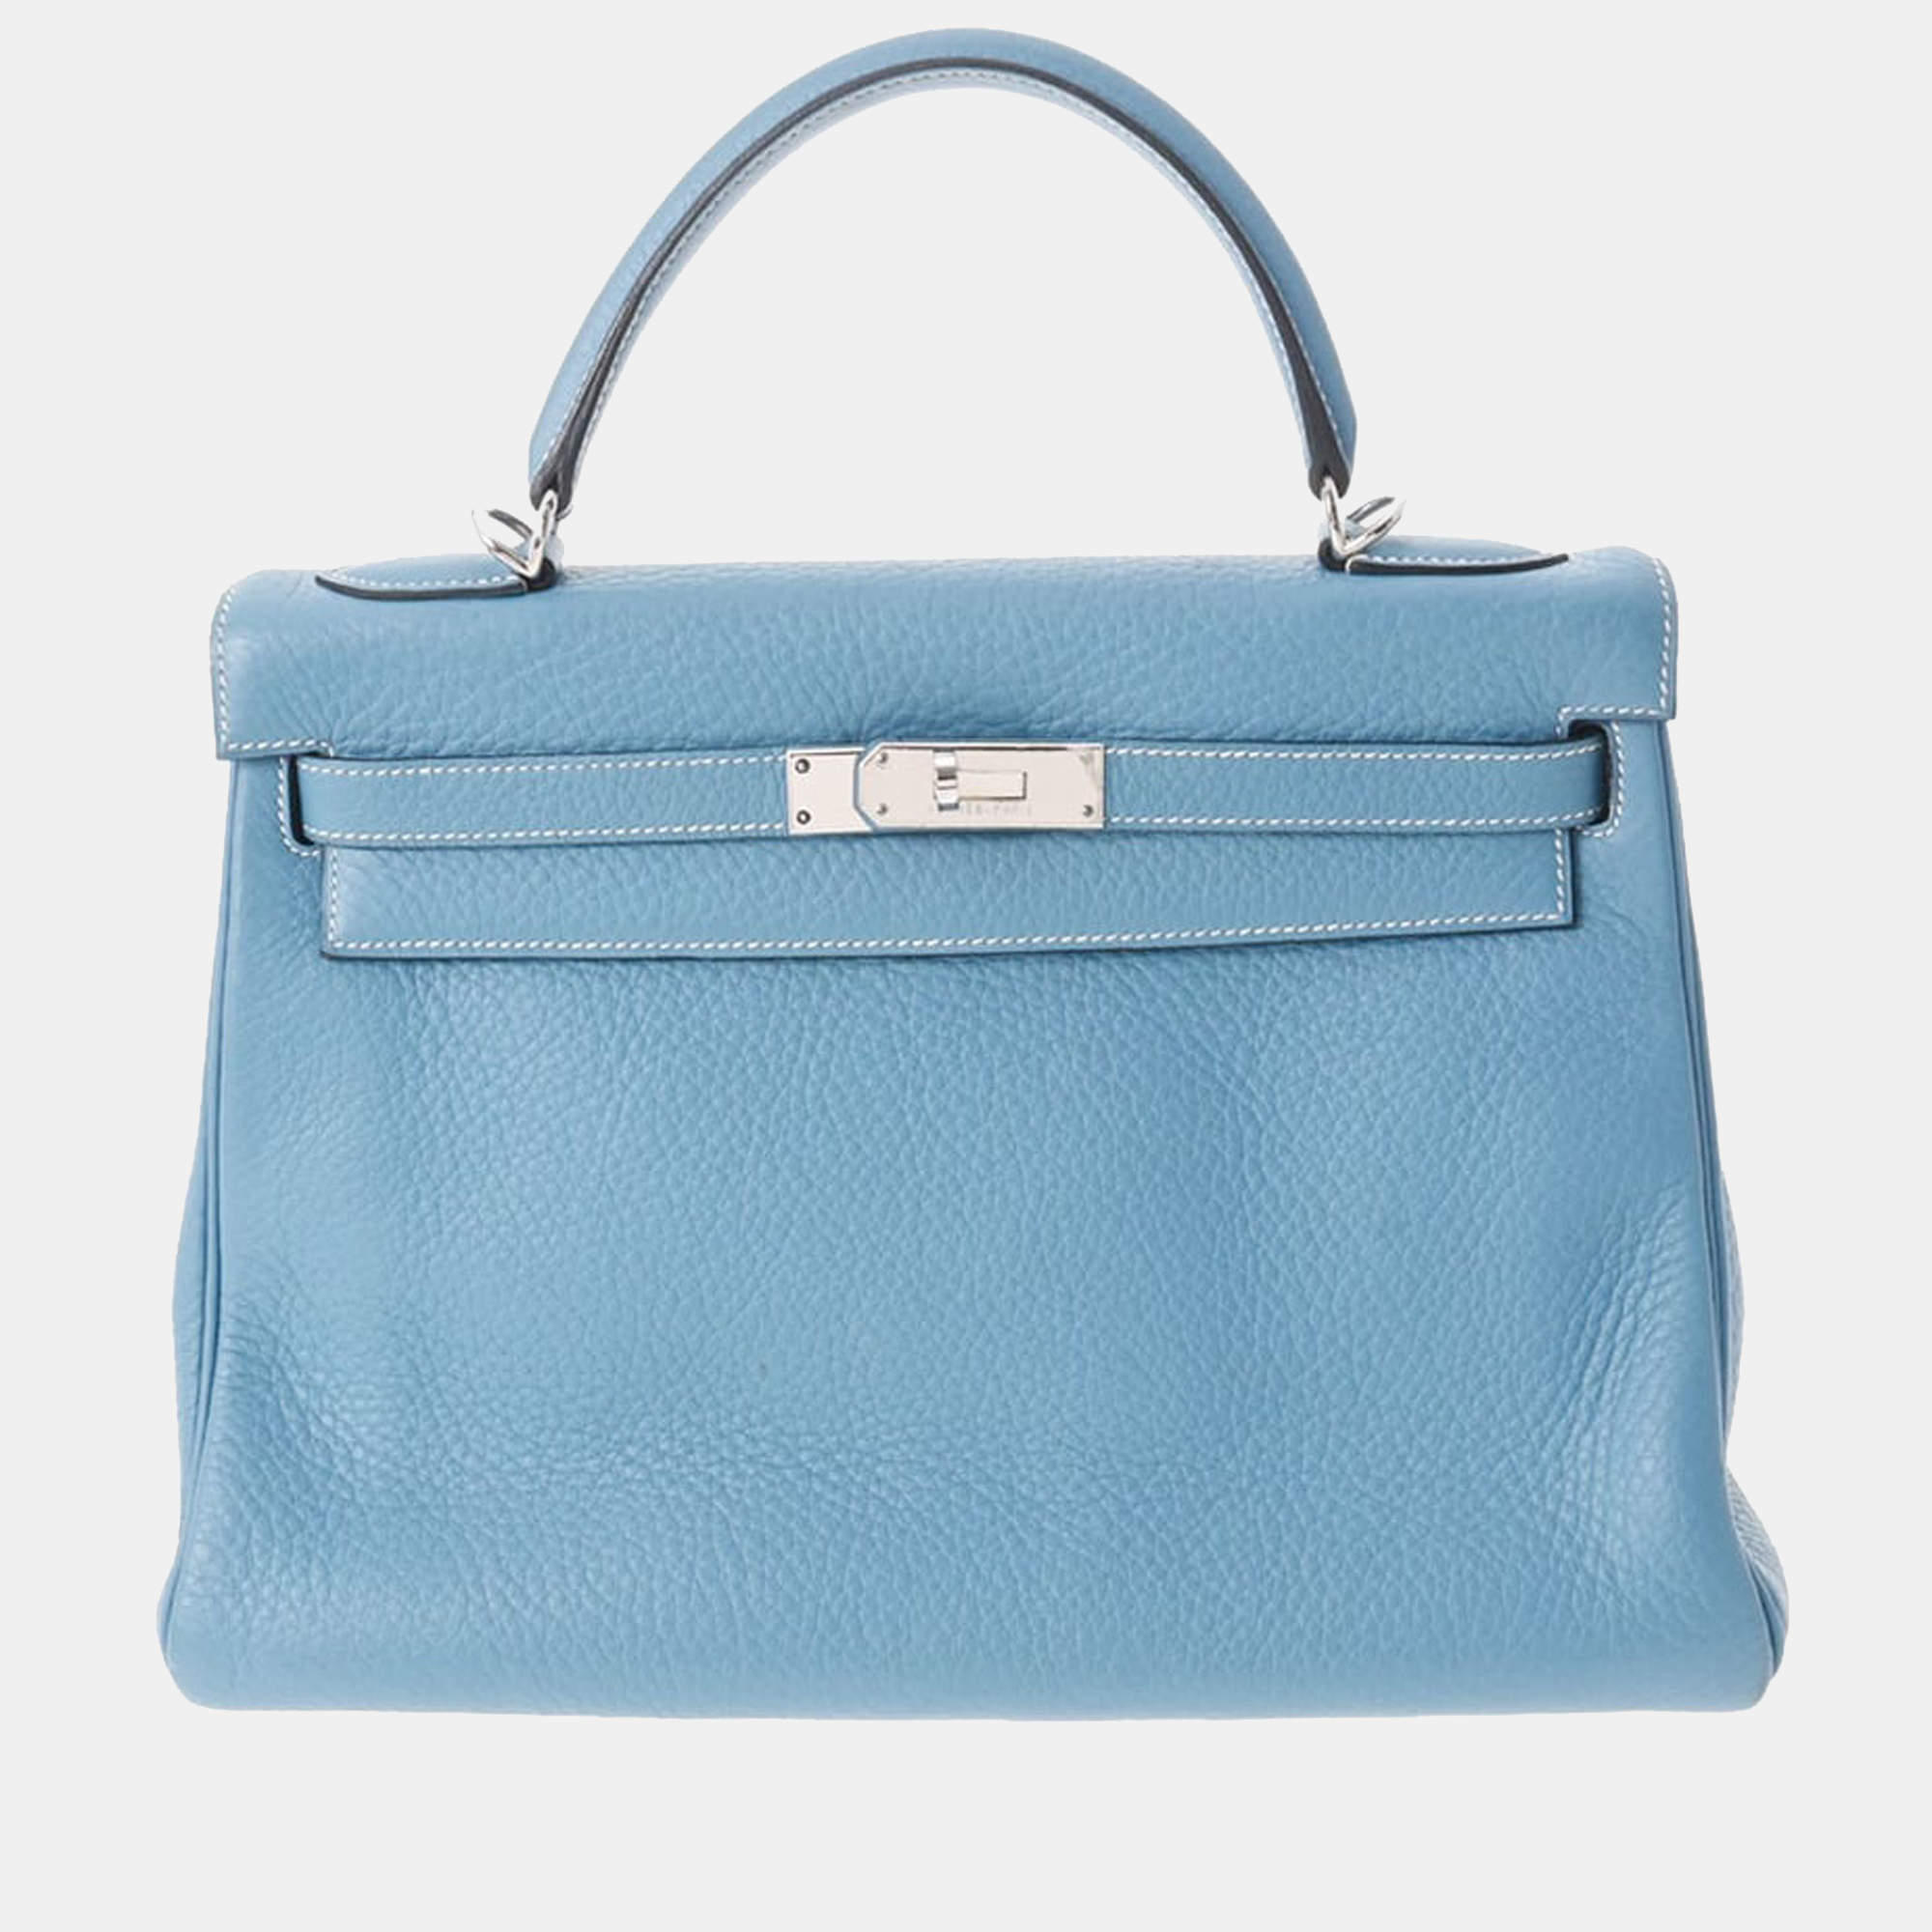 Hermes kelly bag light blue  Hermes kelly bag, Kelly bag, Hermes handbags